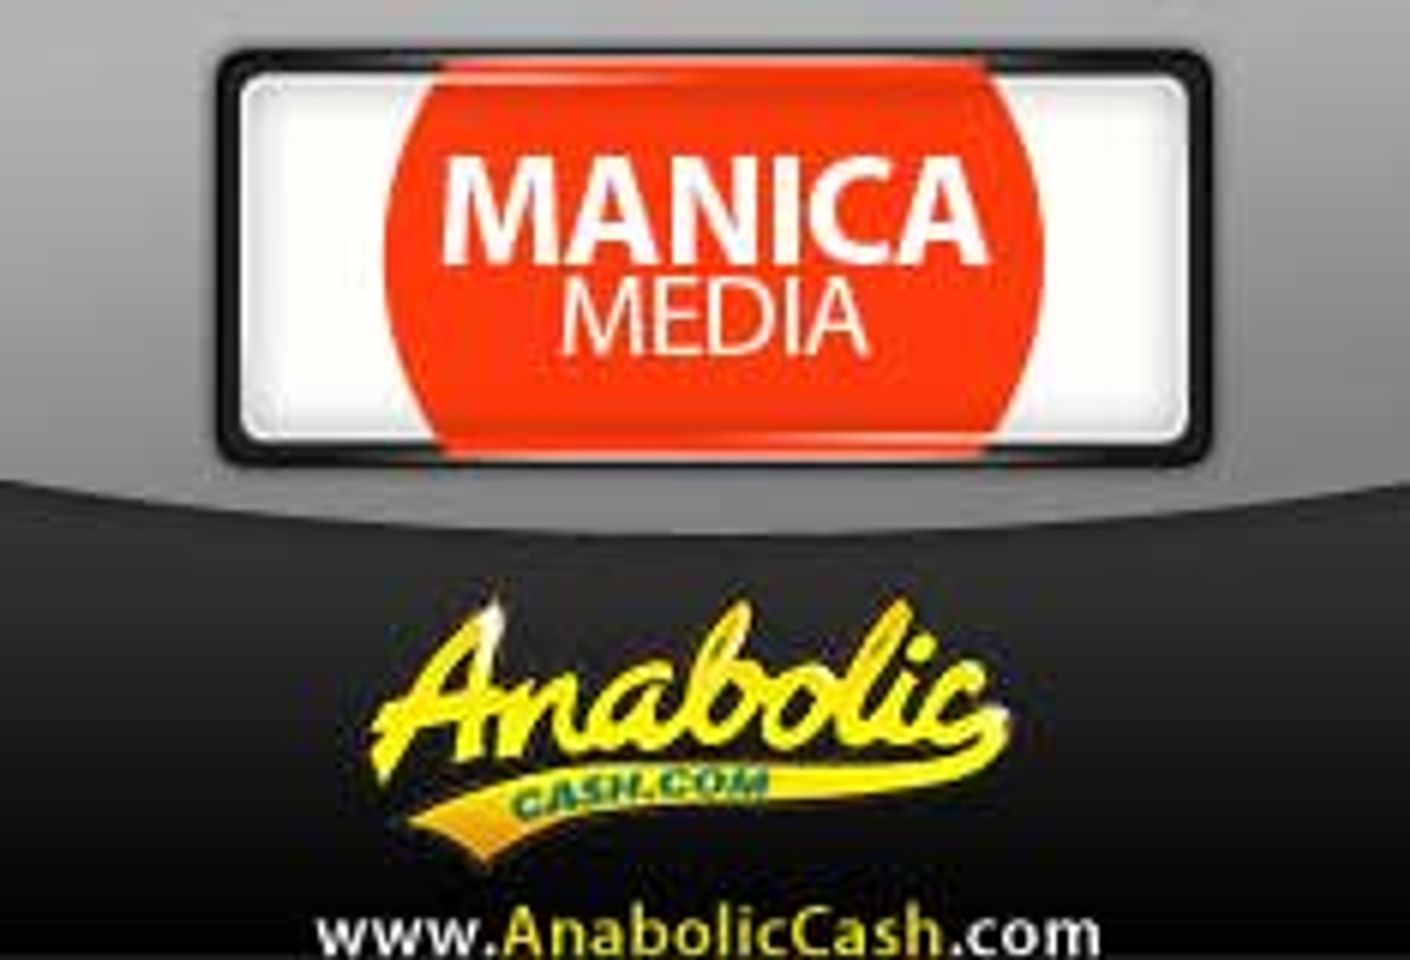 Anabolic Digital, Manica Media Team to Launch Anabolic.com